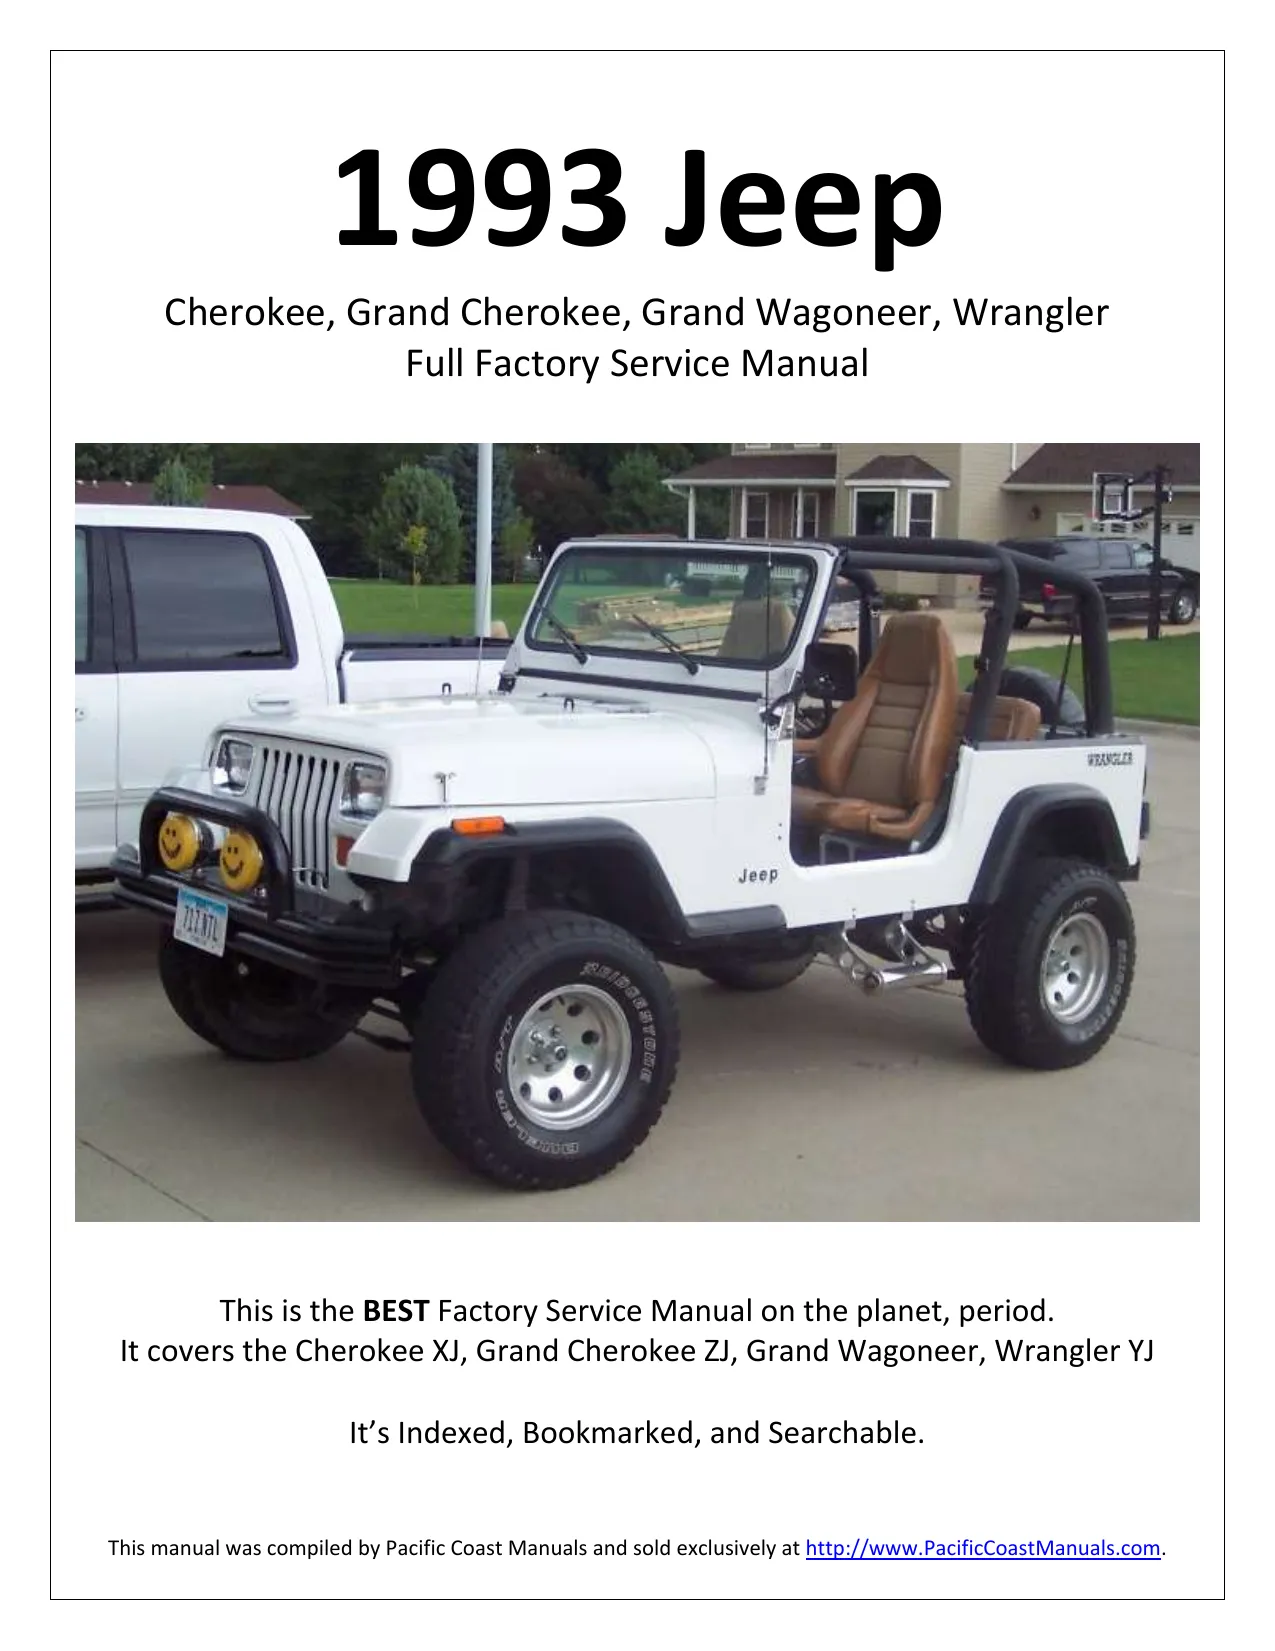 1993 Jeep Wrangler YJ SUV repair manual Preview image 1